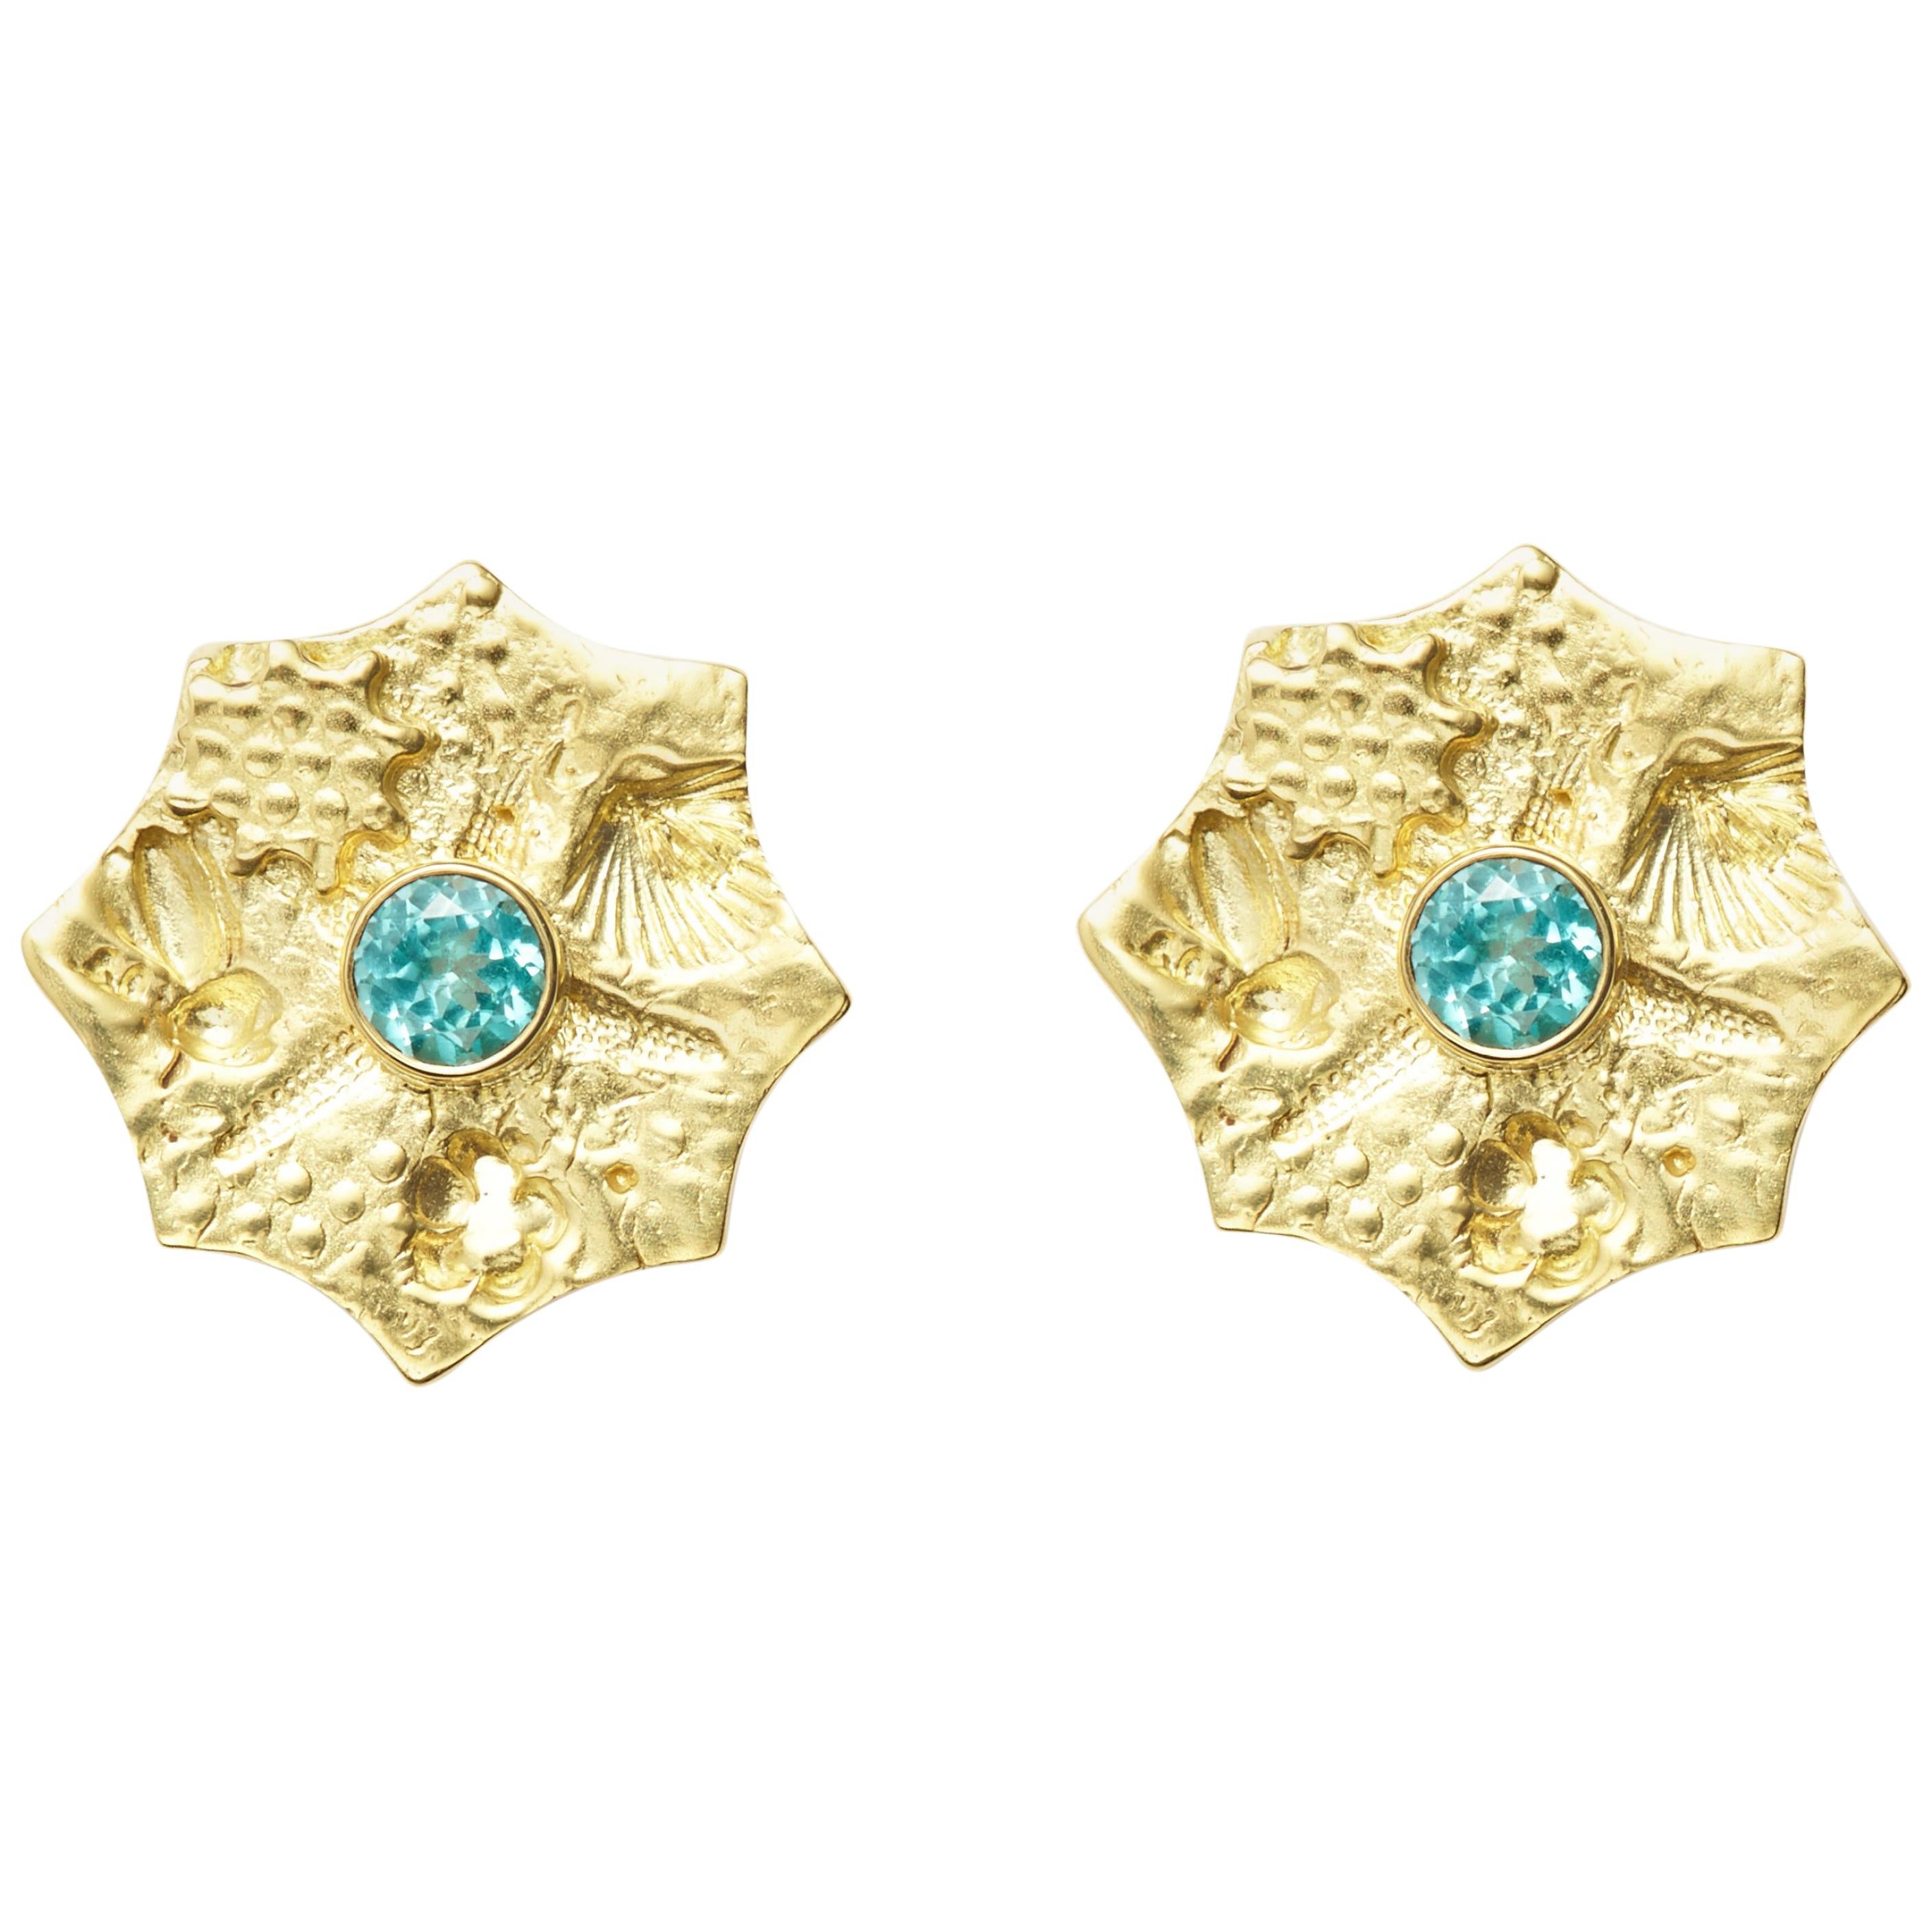 Susan Lister Locke Apatite and 18 Karat Gold Sea Urchin Earrings